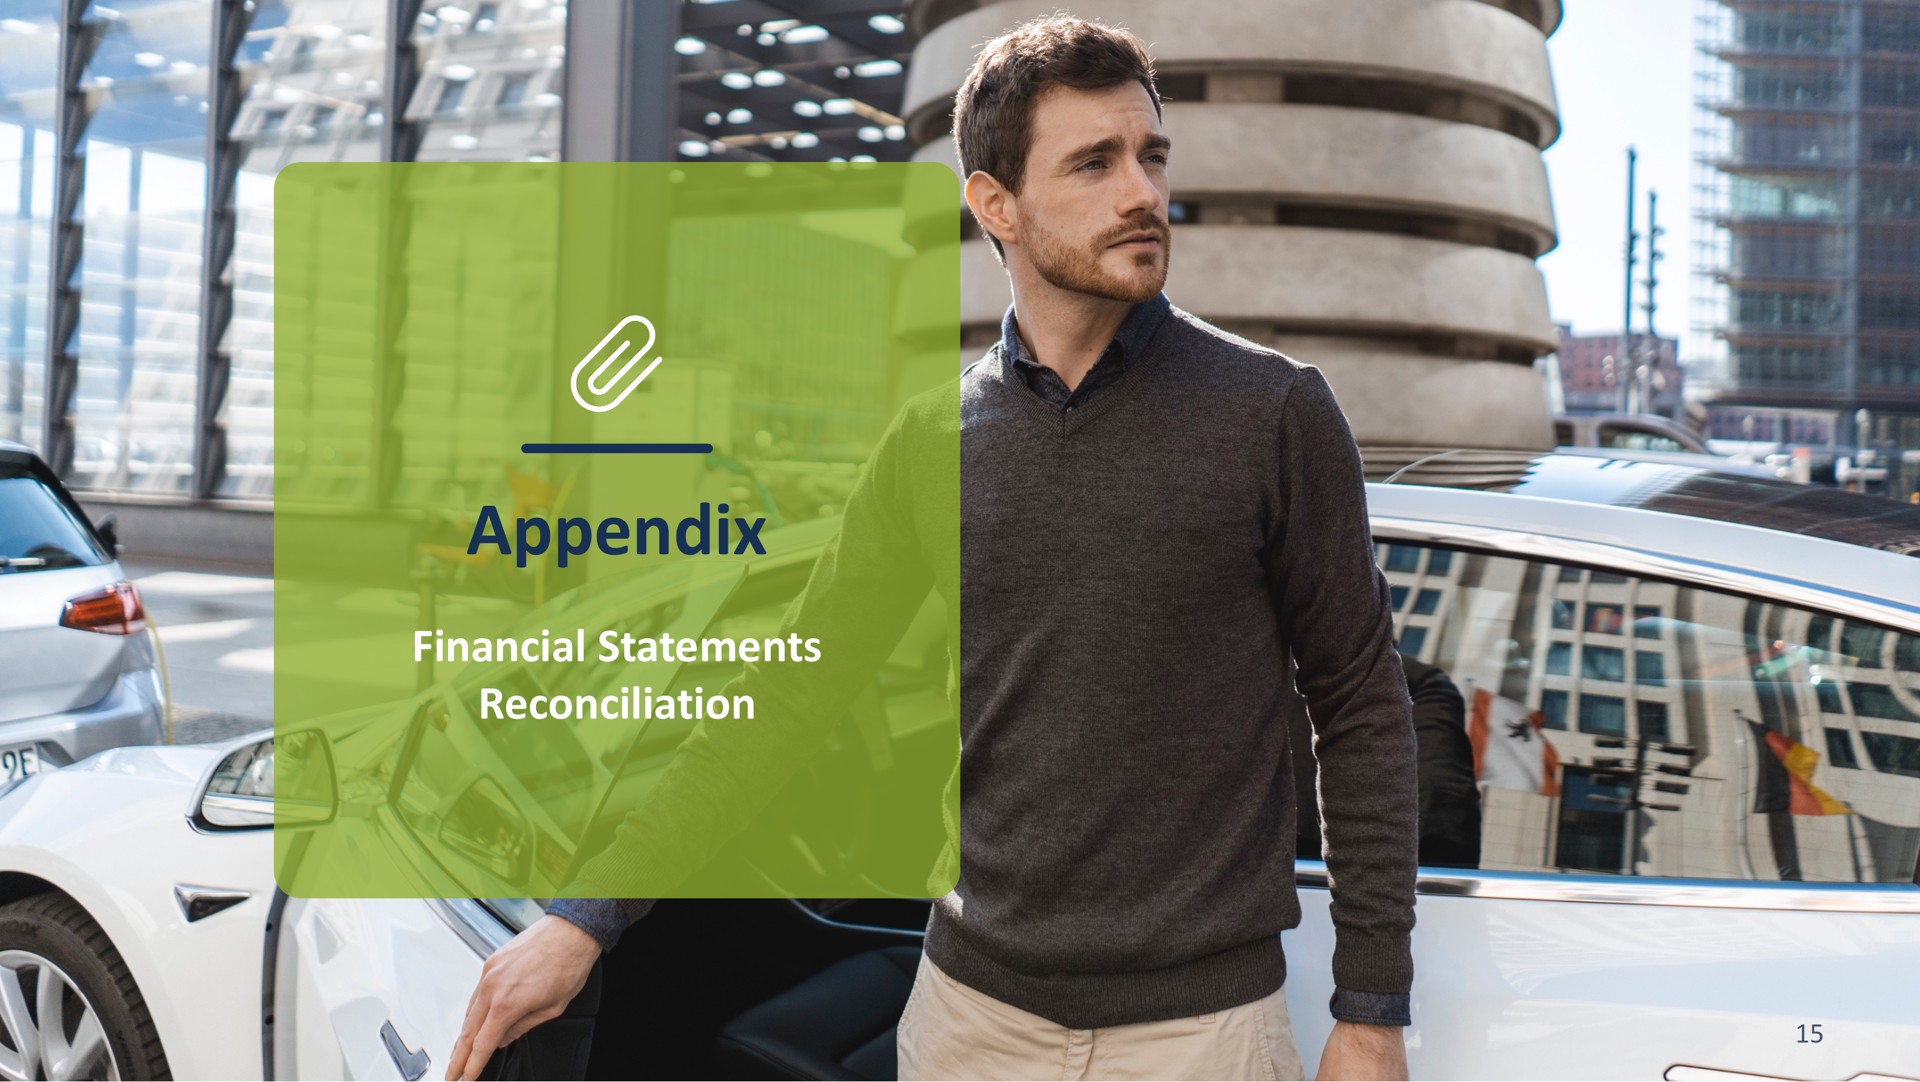 appendix financial statements reconciliation | Allego